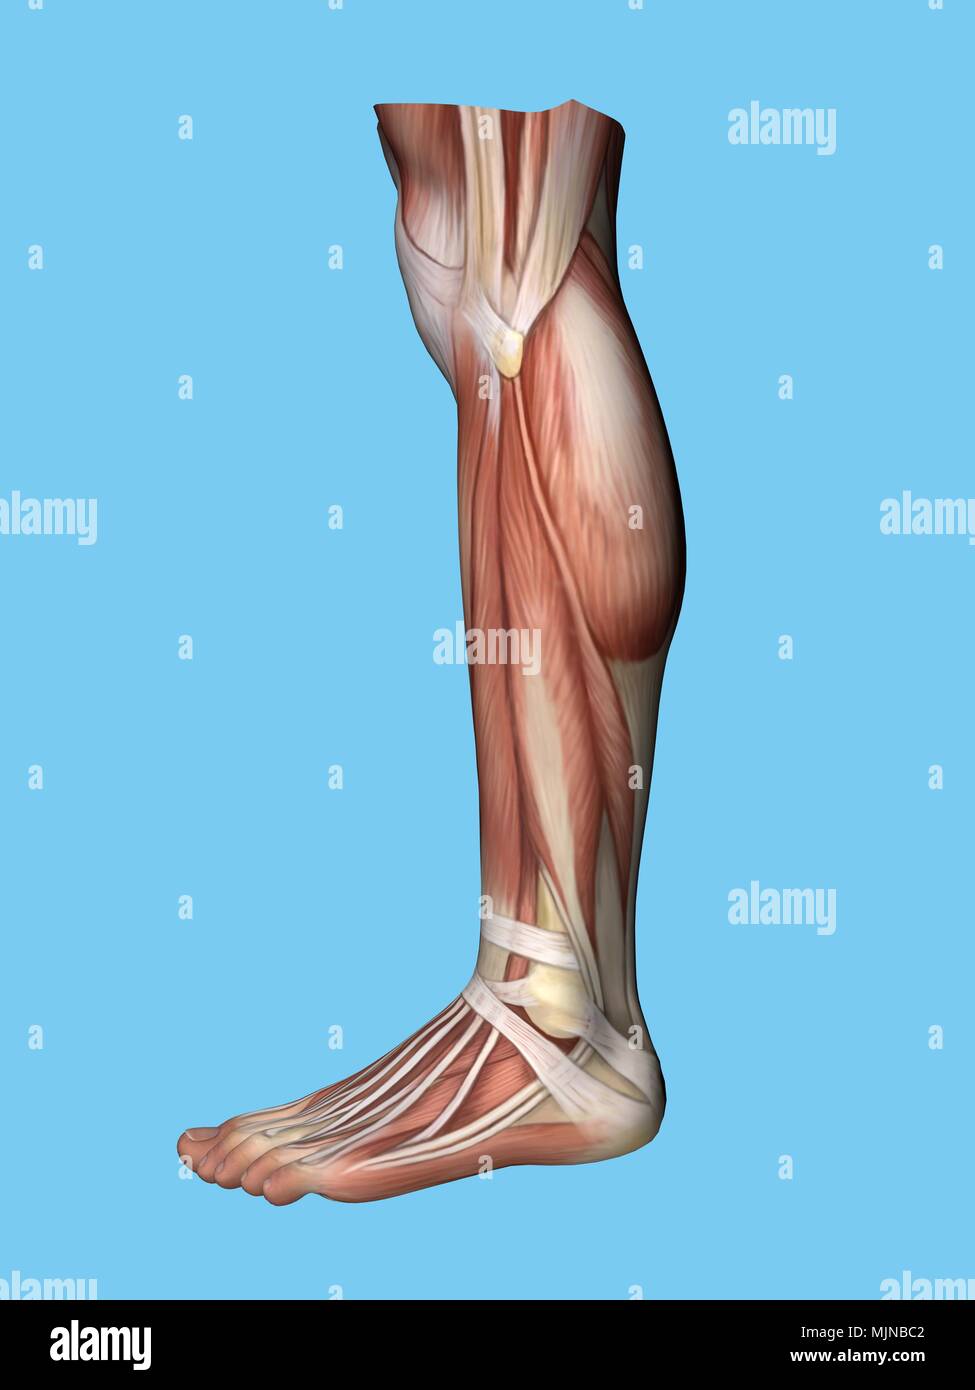 Anatomy of foot Stock Photo